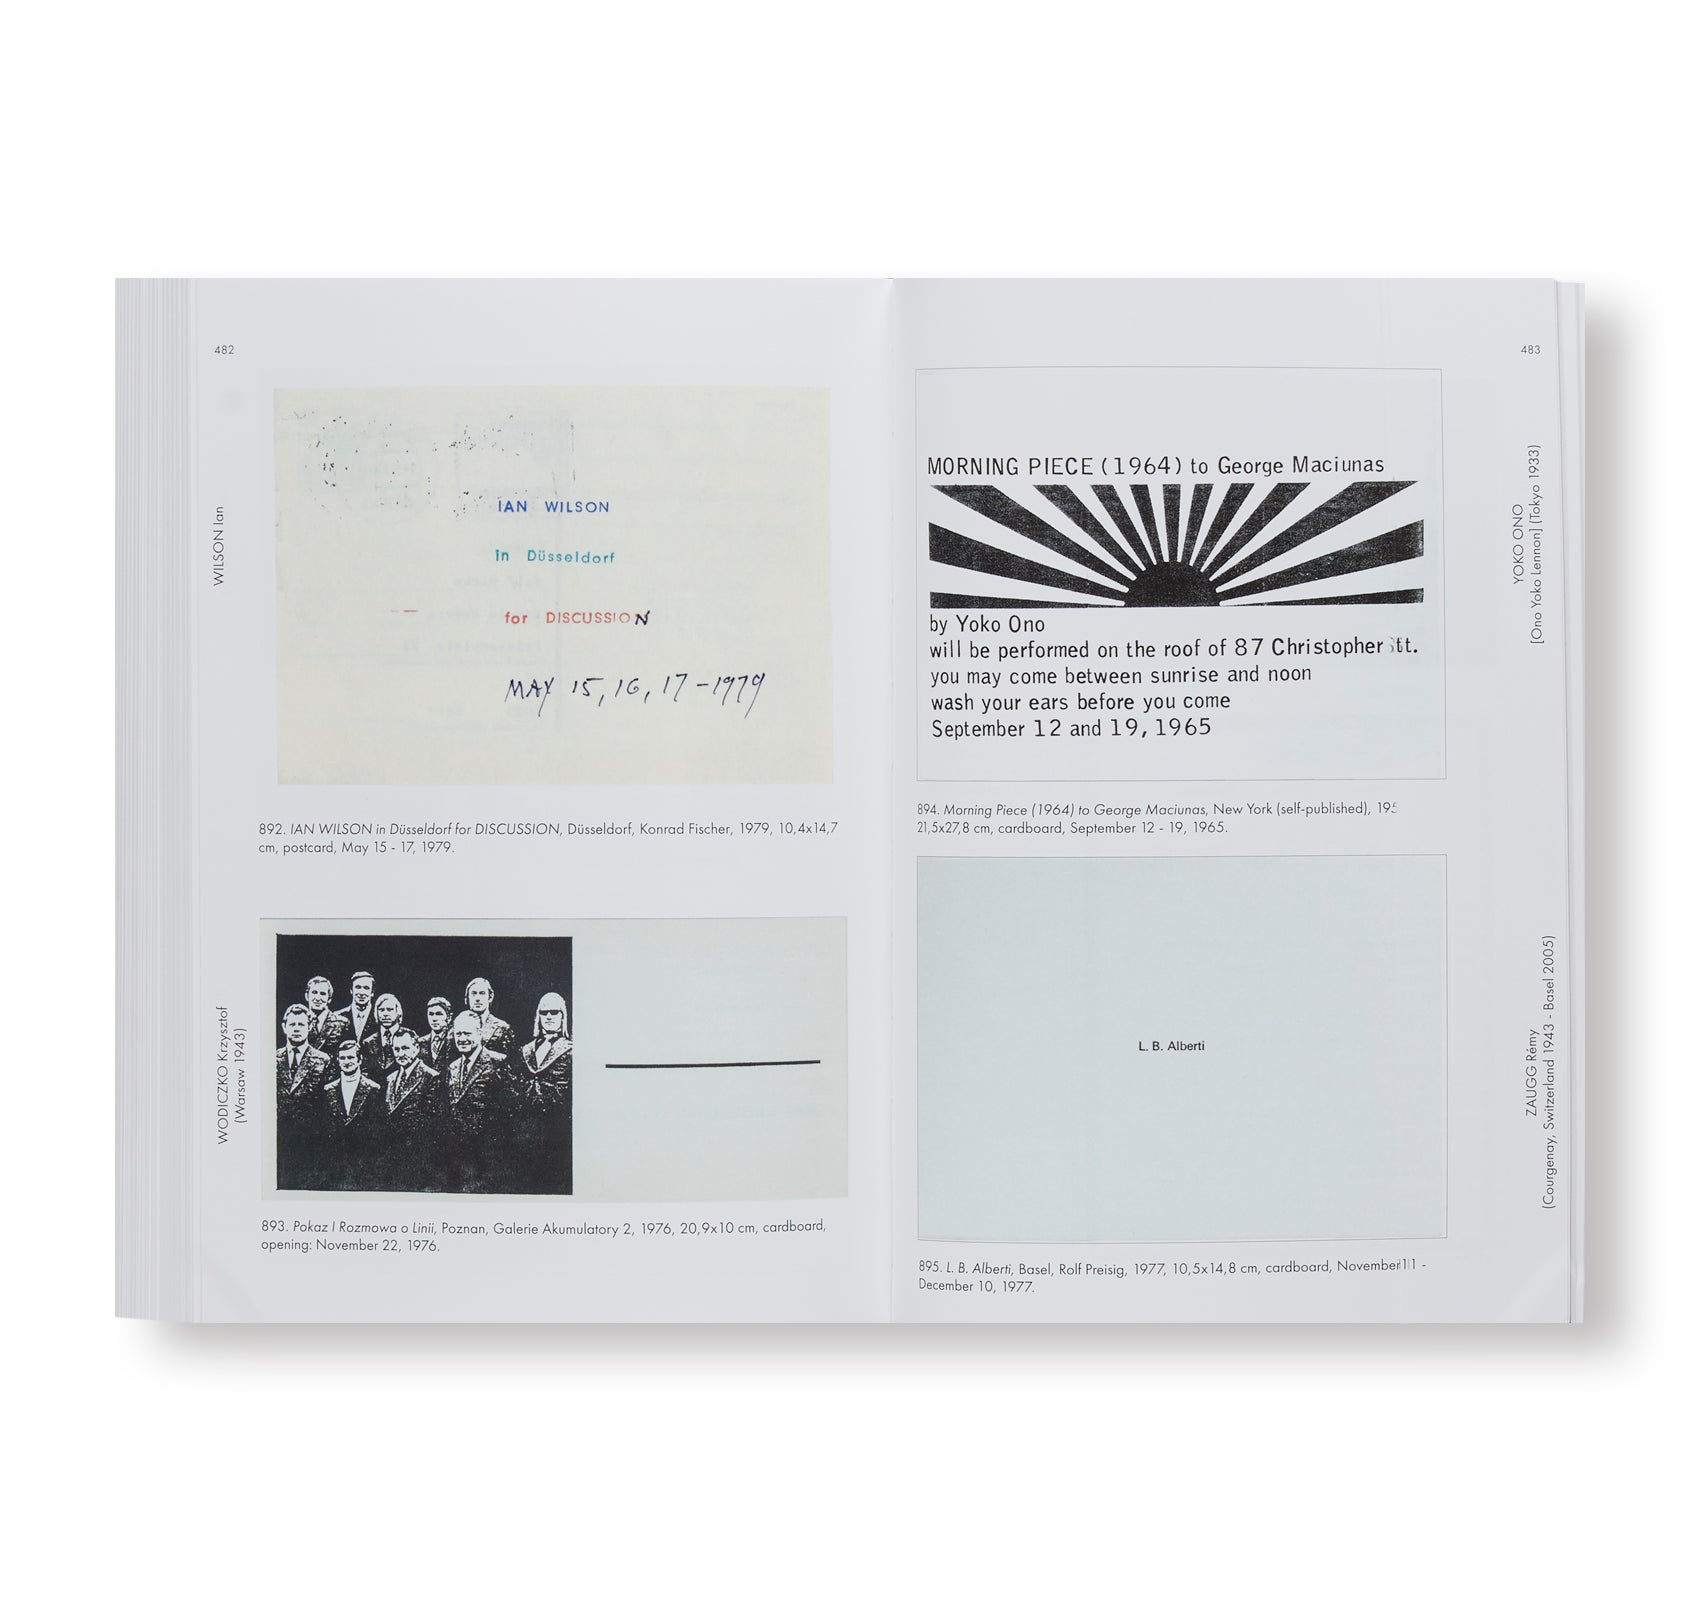 ARTISTS' INVITATIONS 1965-1985 by Bruno Tonini